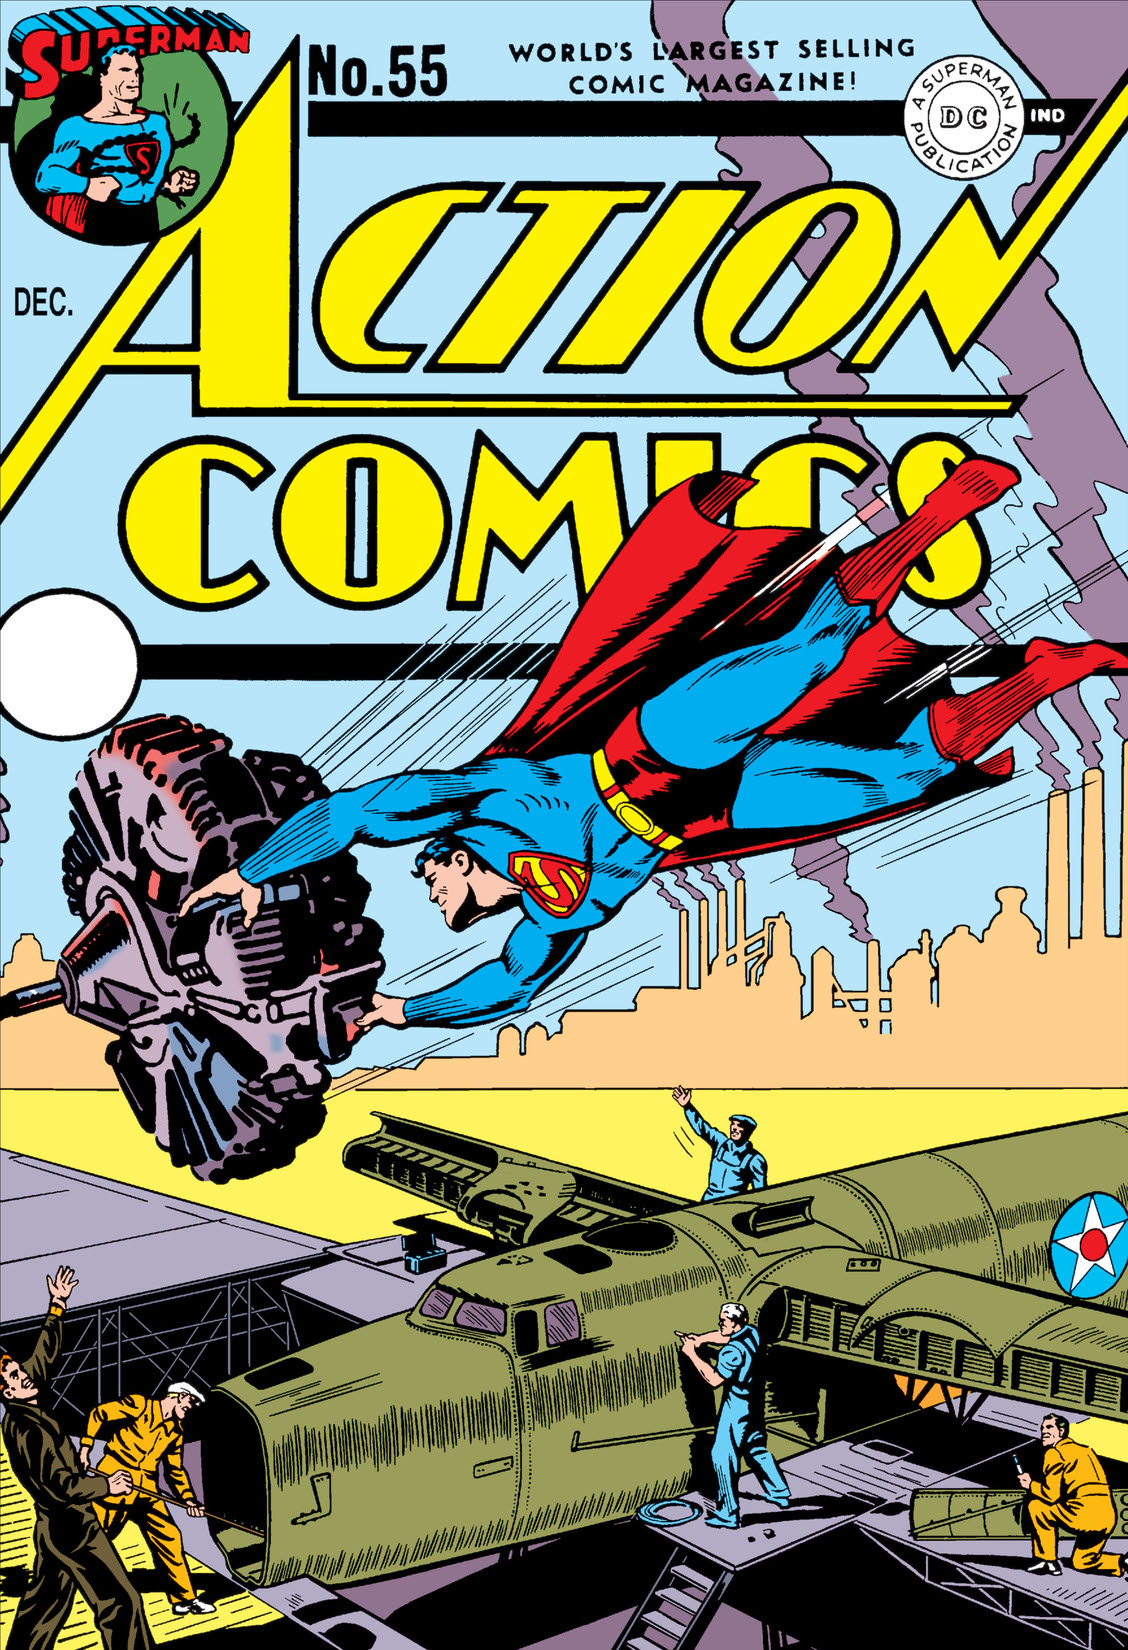 Action Comics (1938-) #55 preview images